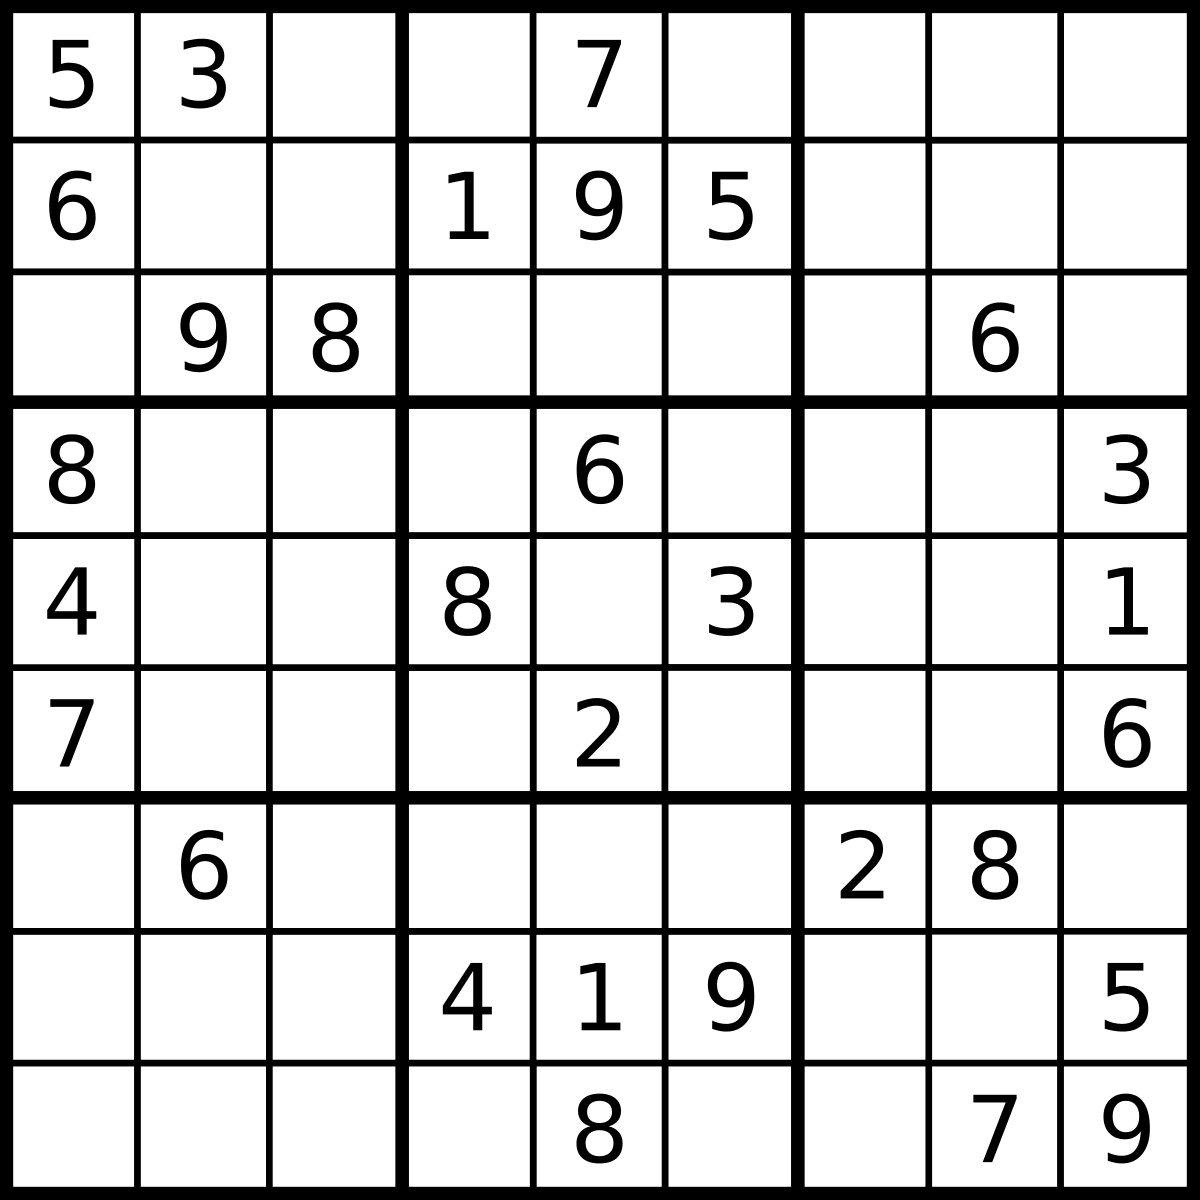 Generating & Solving Sudoku Puzzles, by Daniel Sasse